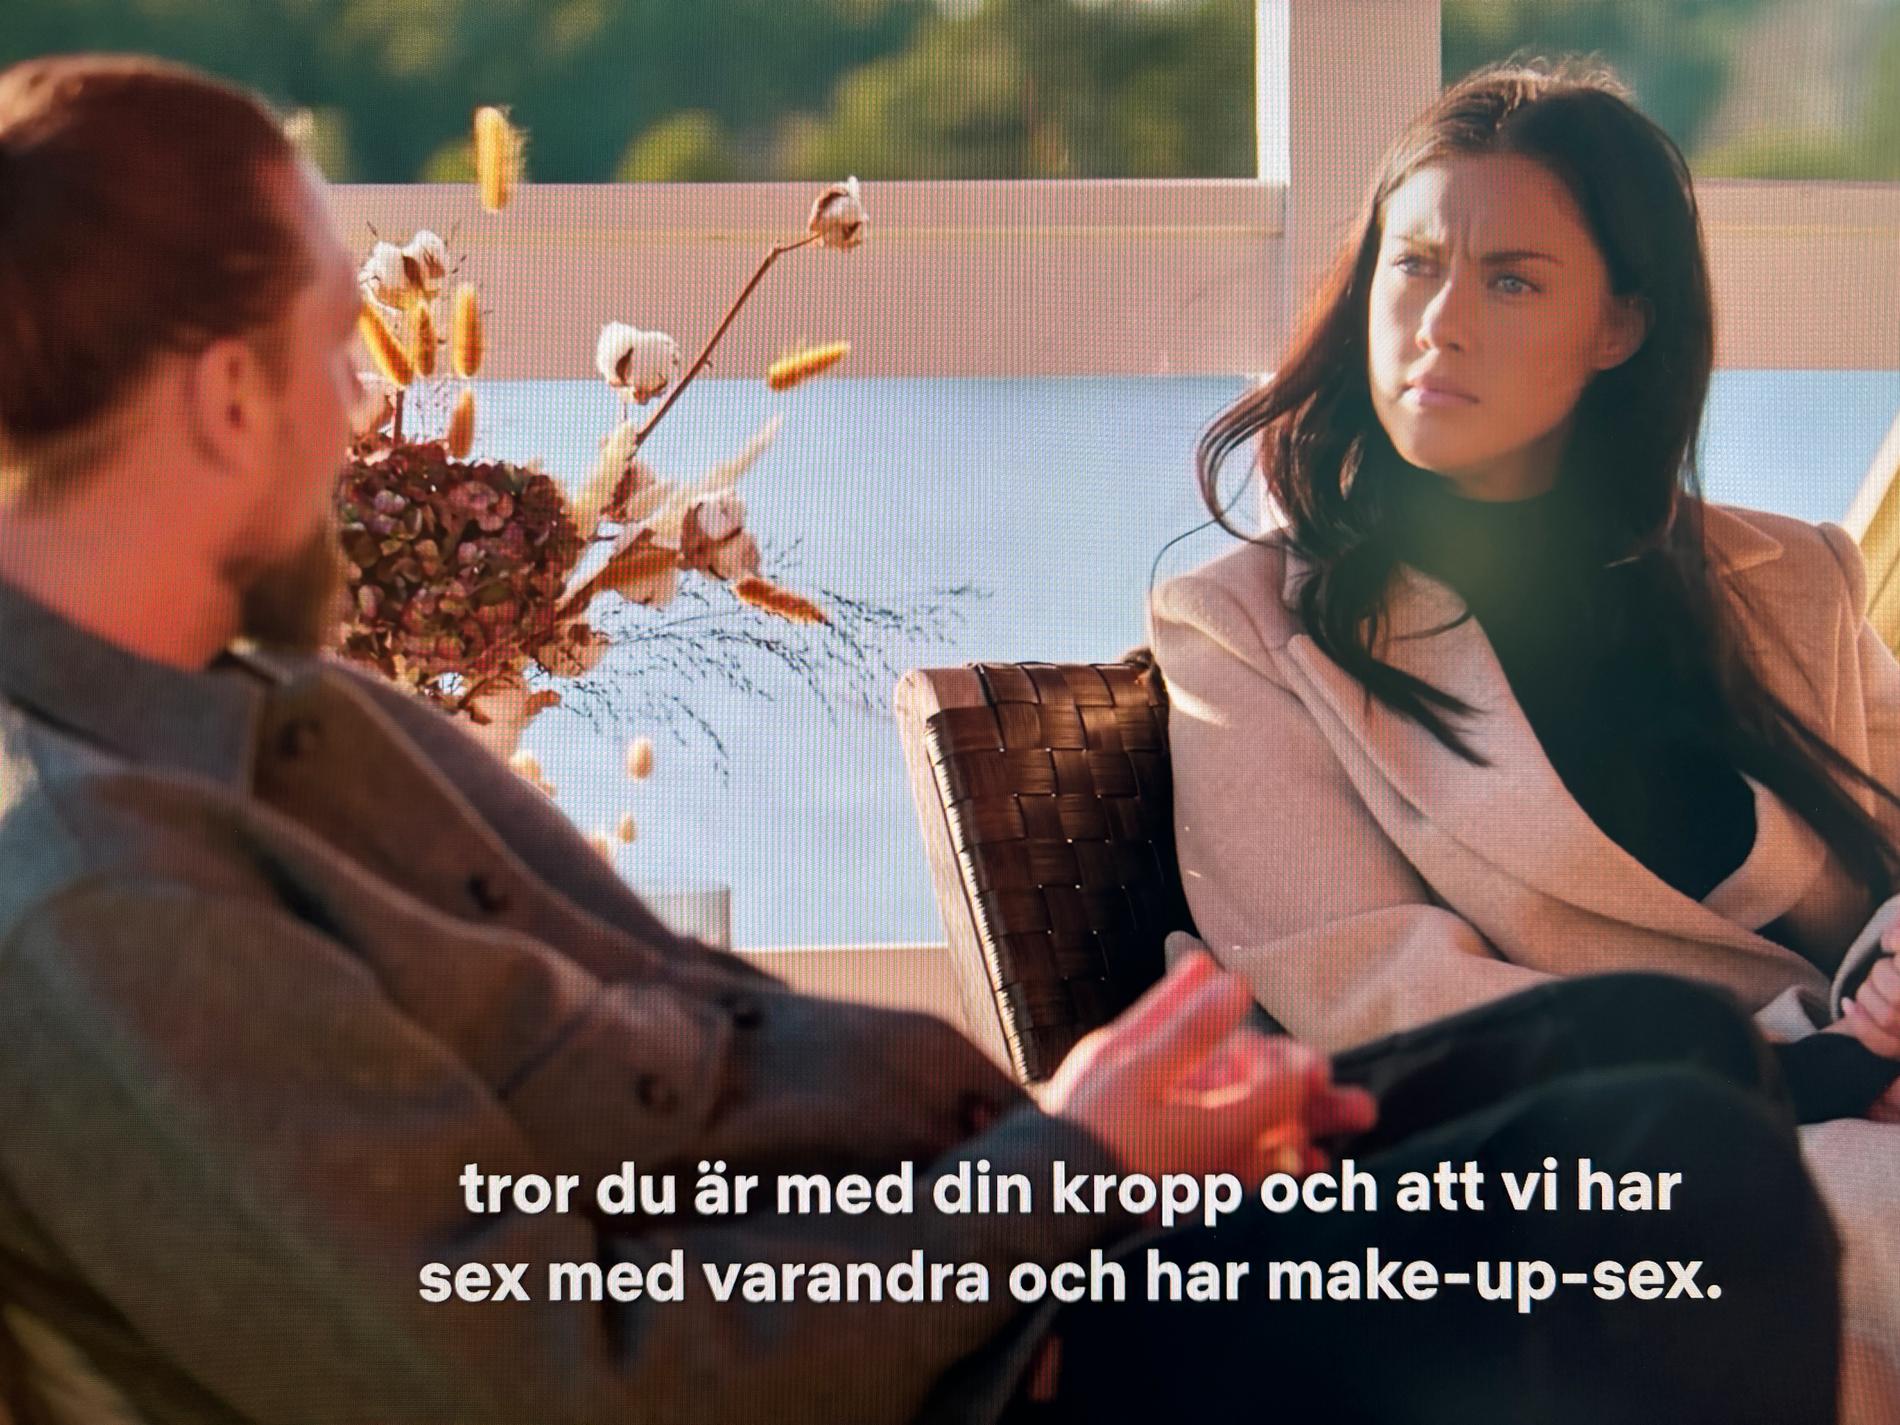 Christofer och Catja i ”Love is blind Sverige”.